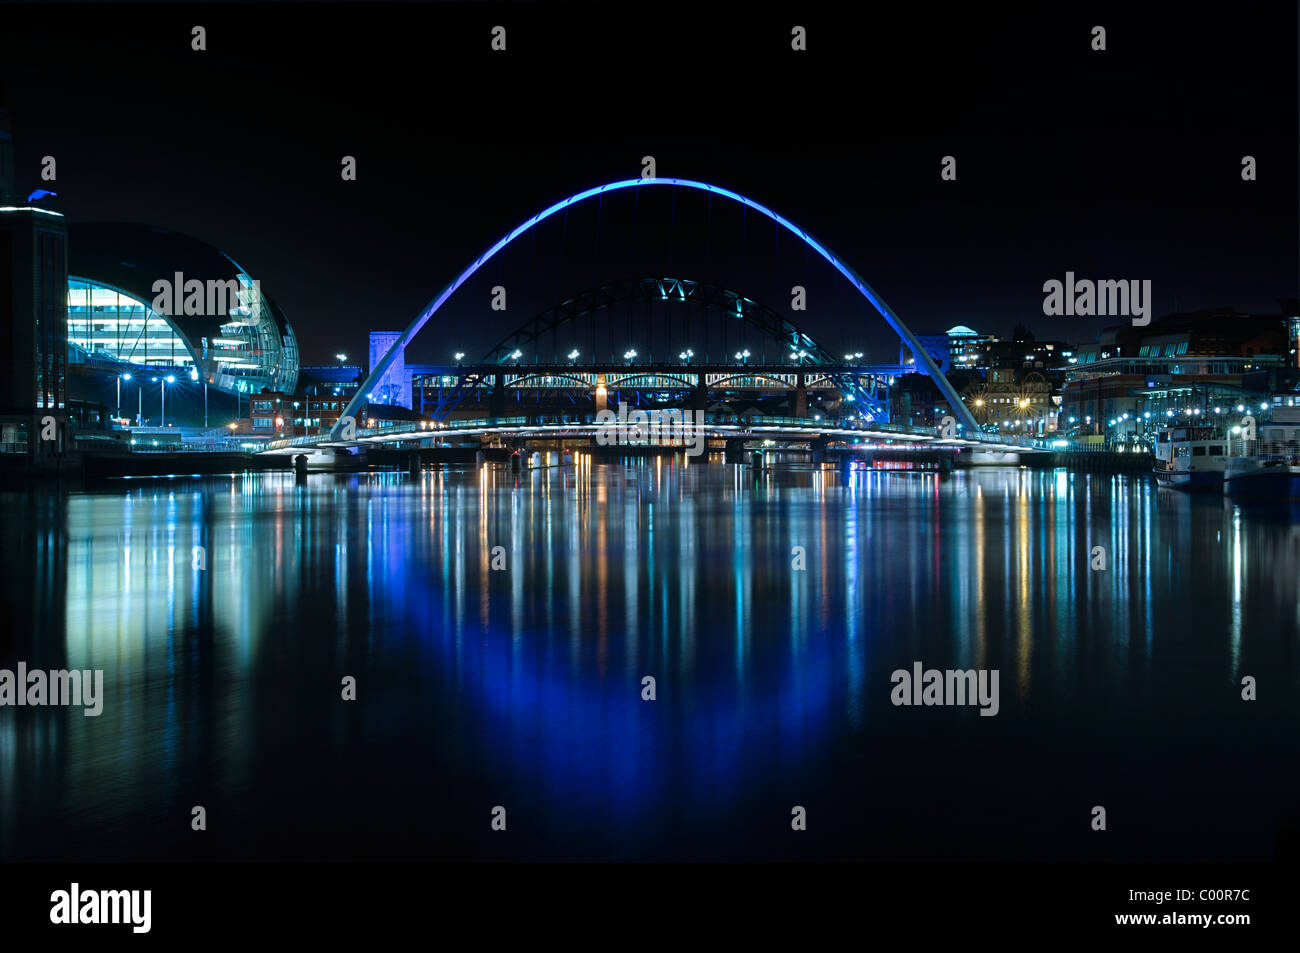 La notte fotografia di ponti sul fiume Tyne a Newcastle upon Tyne/Gateshead. Foto Stock